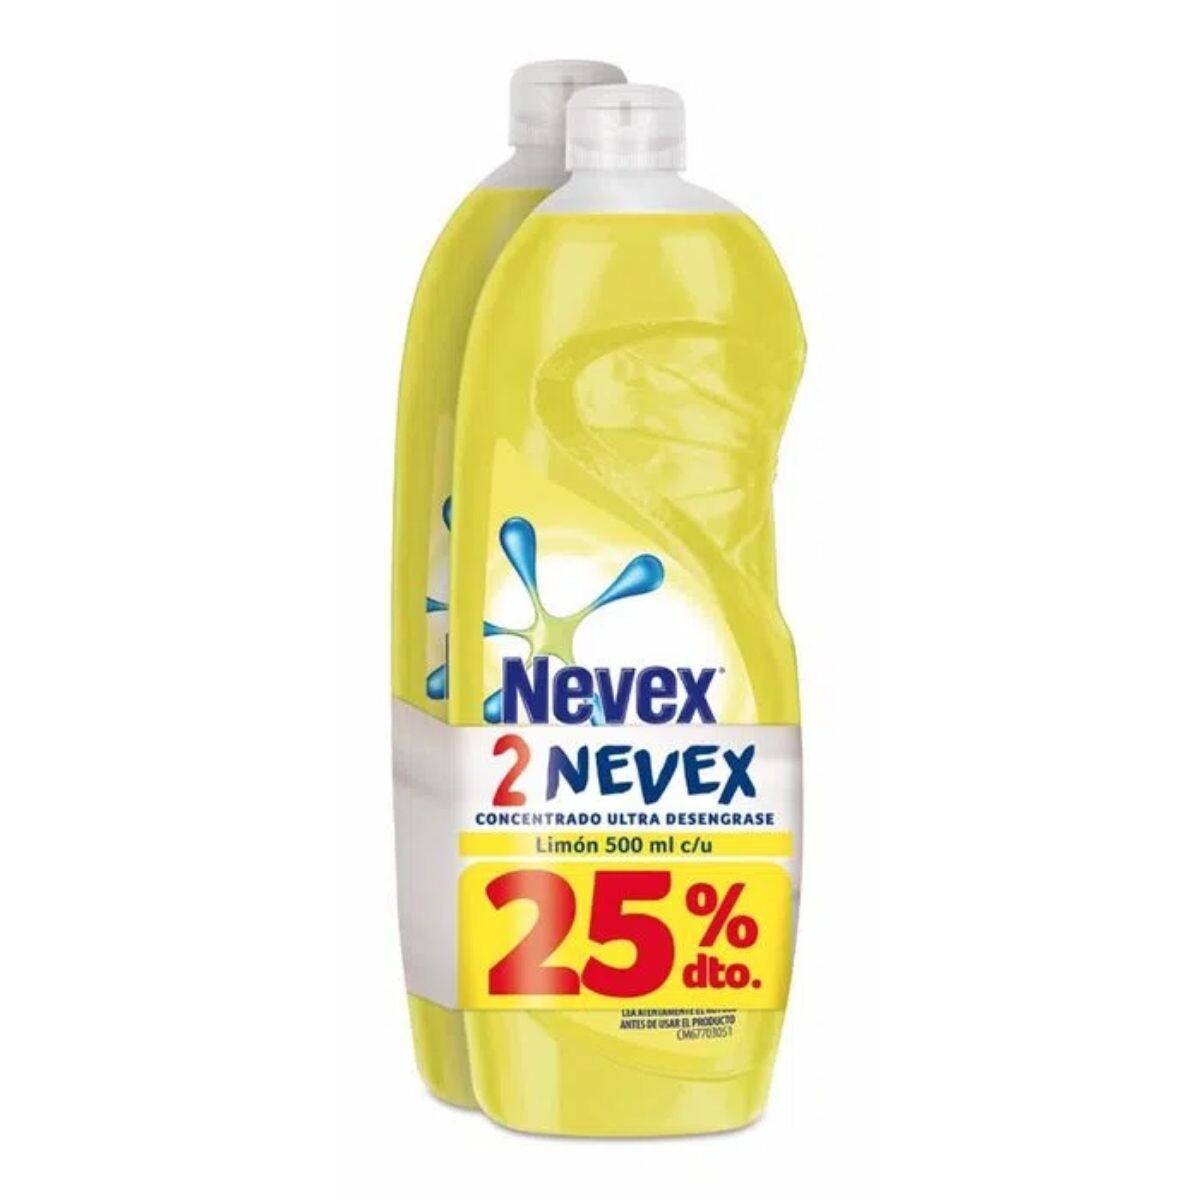 Detergente Líquido Nevex Concentrado Ultra Desengrasante Limón Pack X2 500 ML 25% OFF 